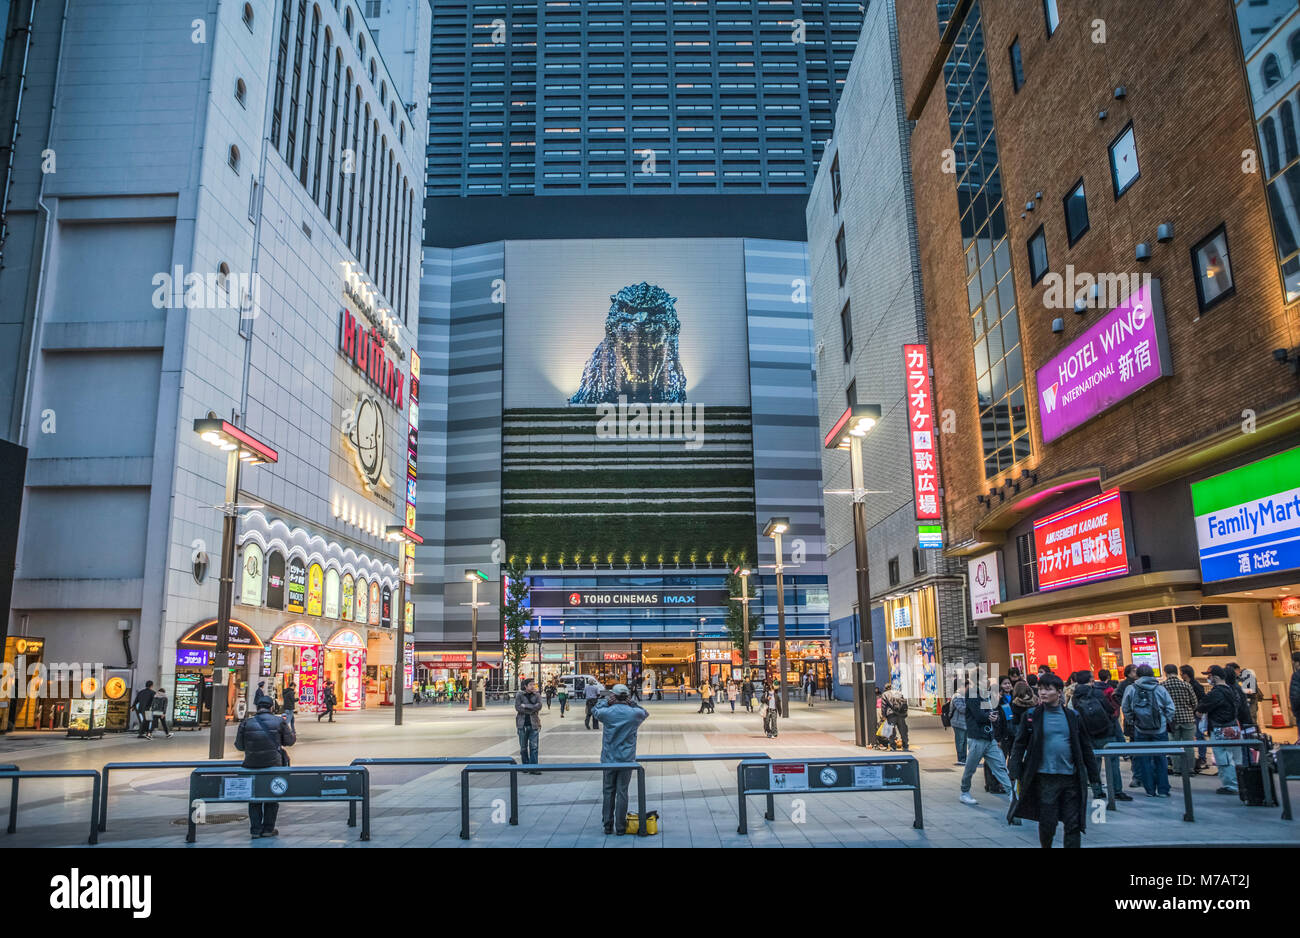 Japan, Tokyo City, Shinjuku District, Kabukicho area, Stock Photo